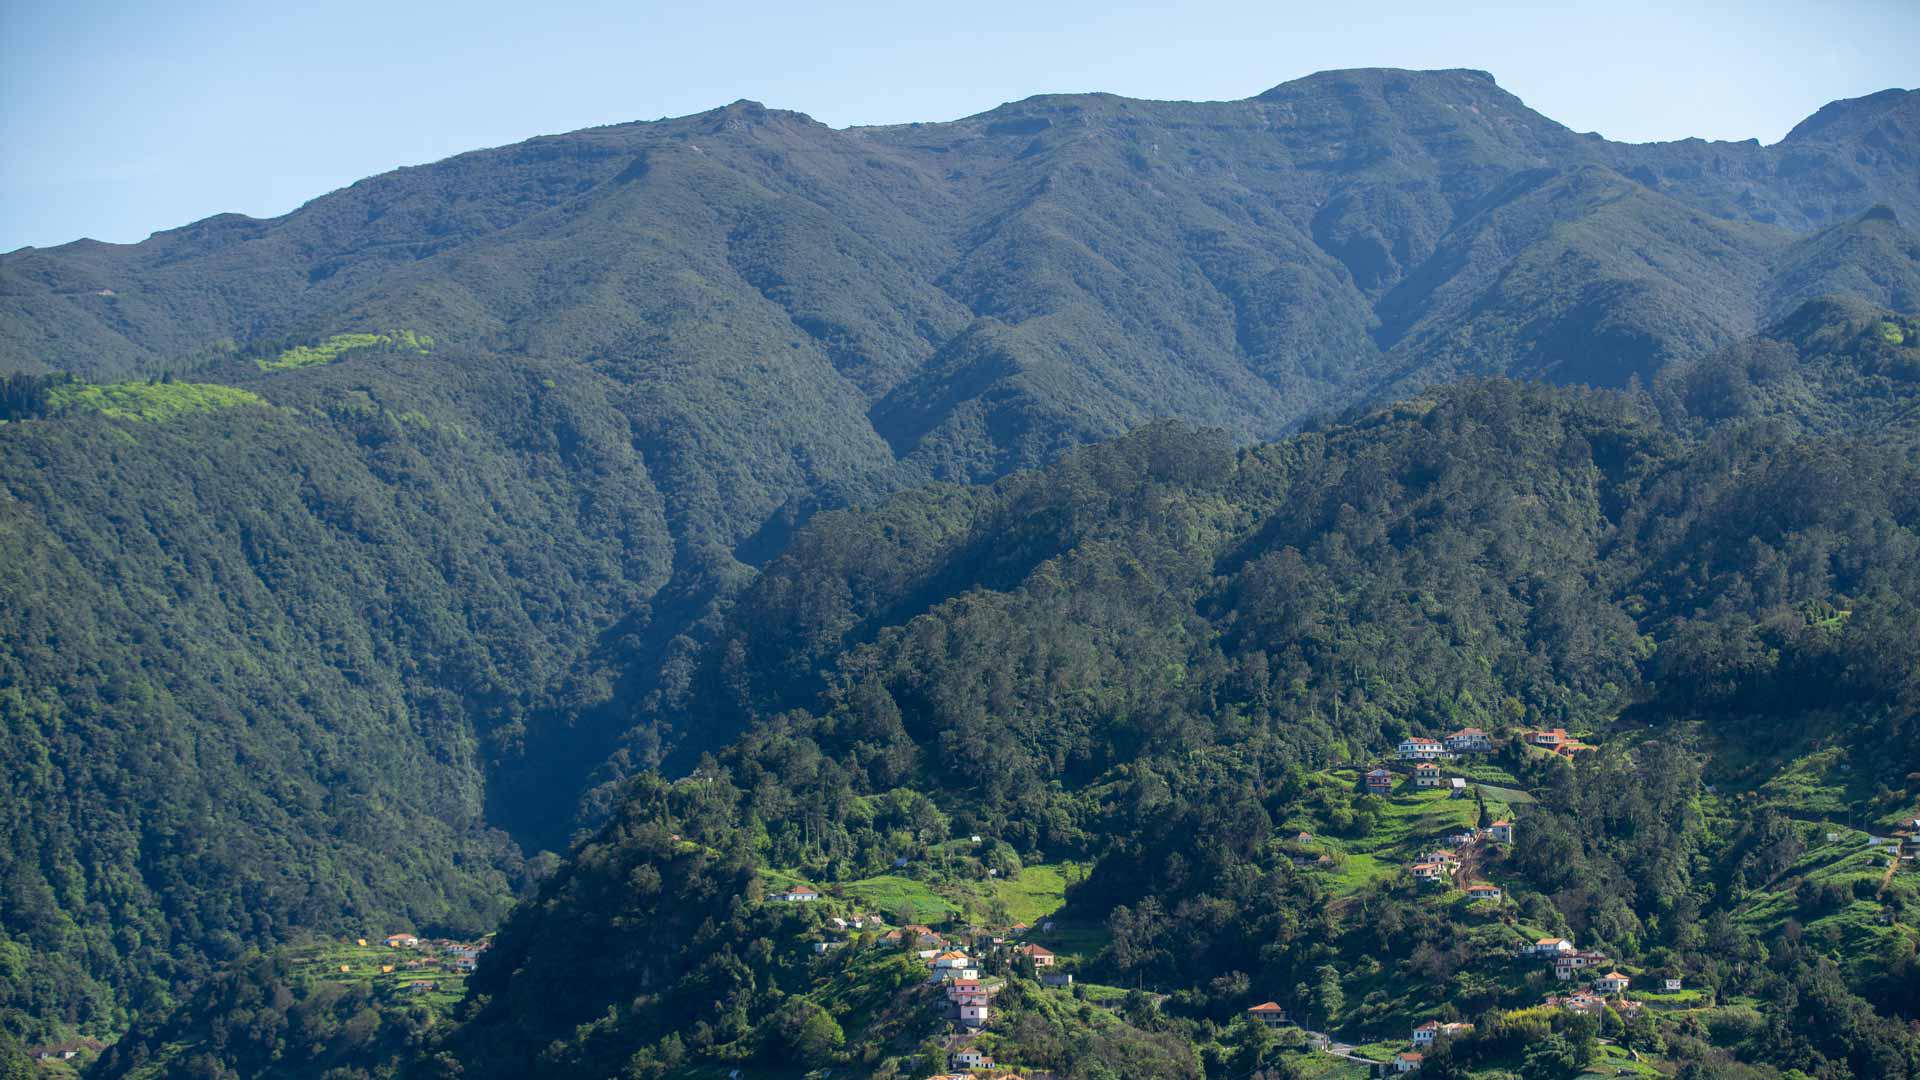 File:Pico da Vara 5 panorama.jpg - Wikipedia